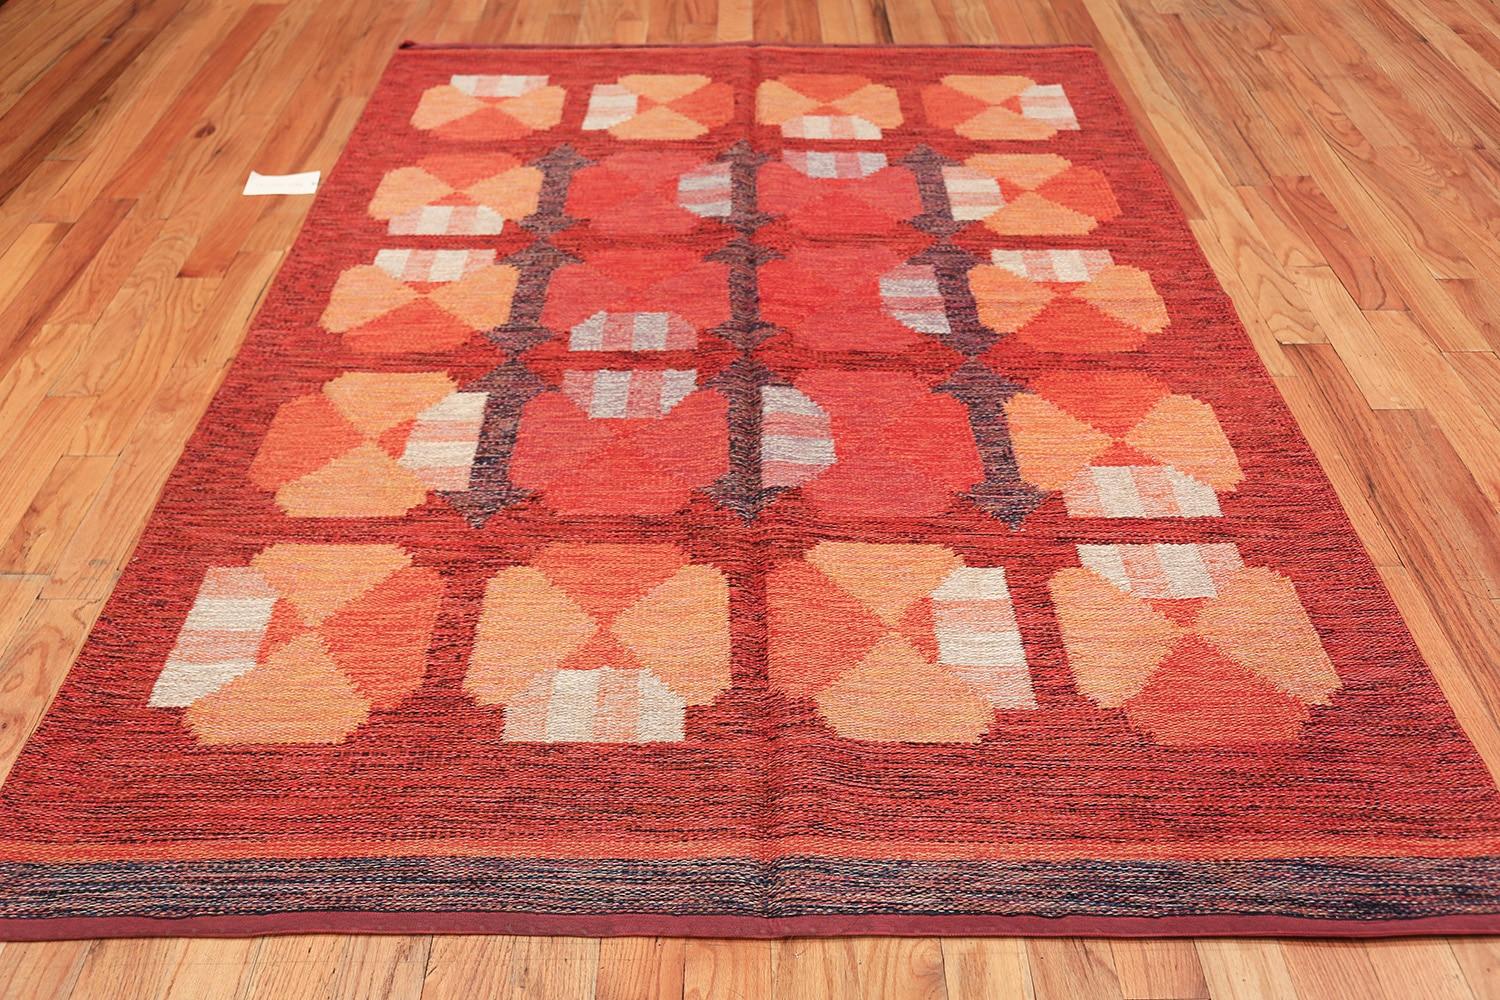 Vintage Finnish Carpet by Alestalon Mattokutomo. Size: 5 ft 4 in x 7 ft 9 in 1